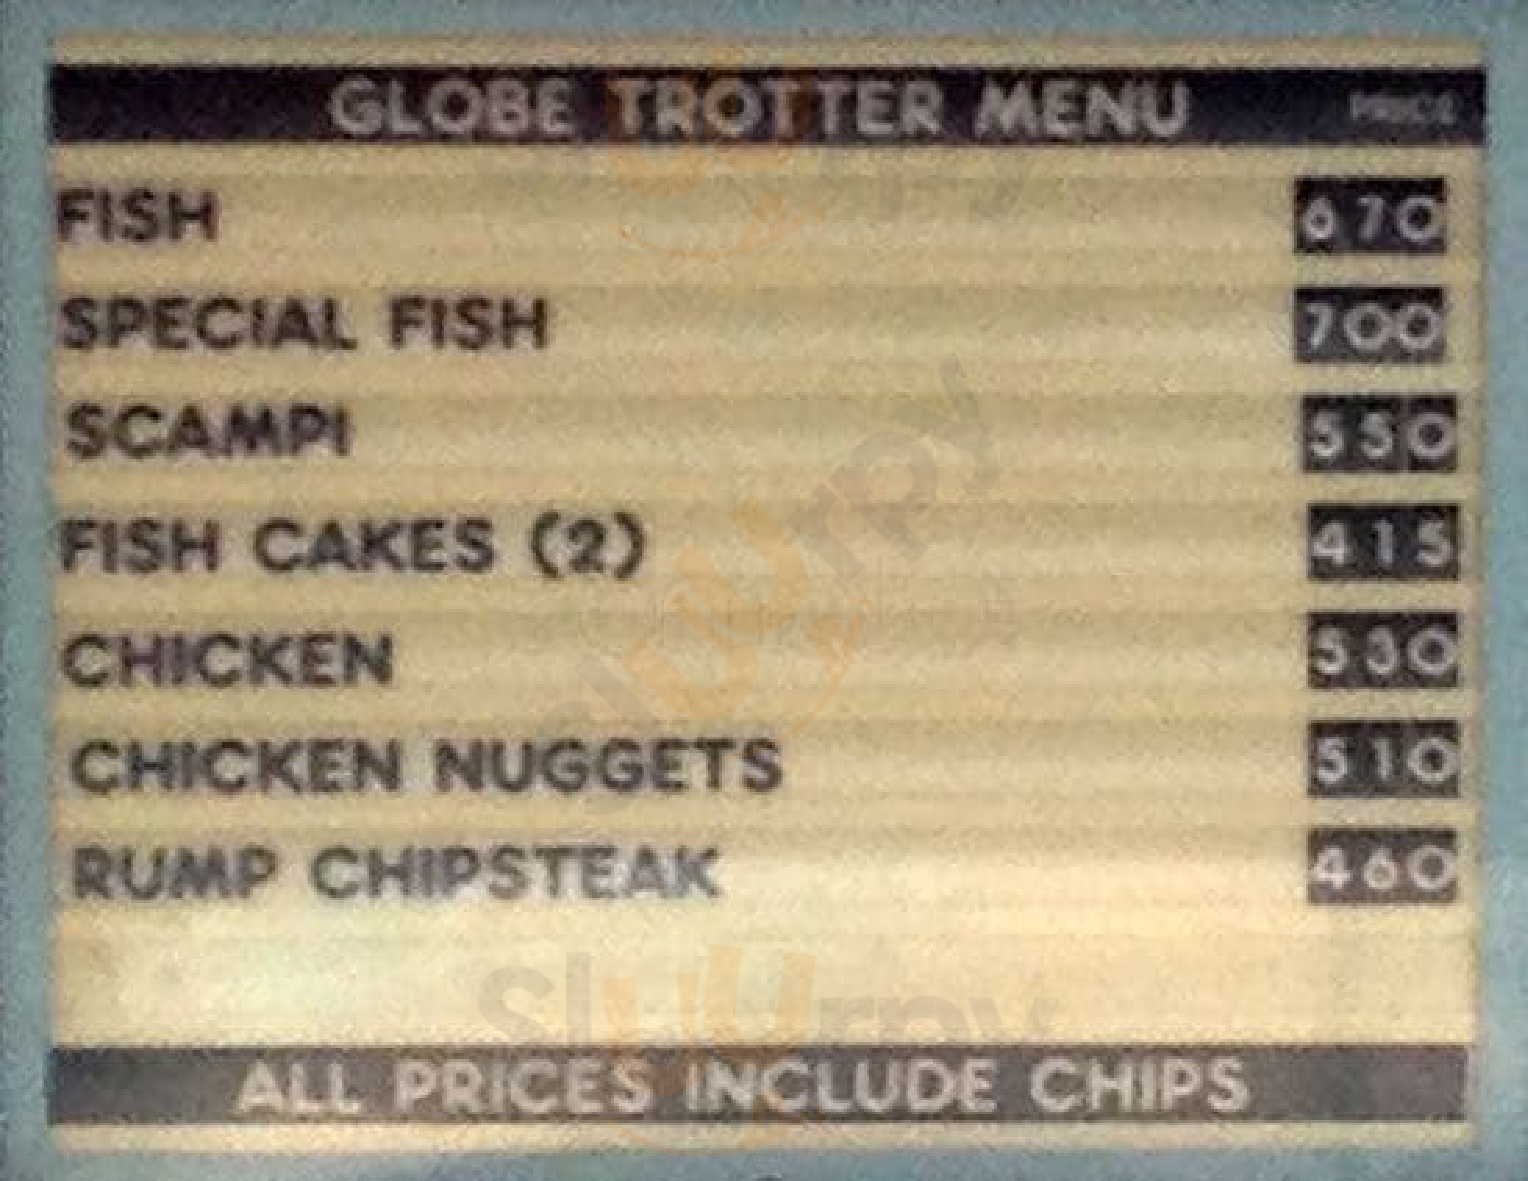 Globetrotter Fish & Chips Edinburgh Menu - 1